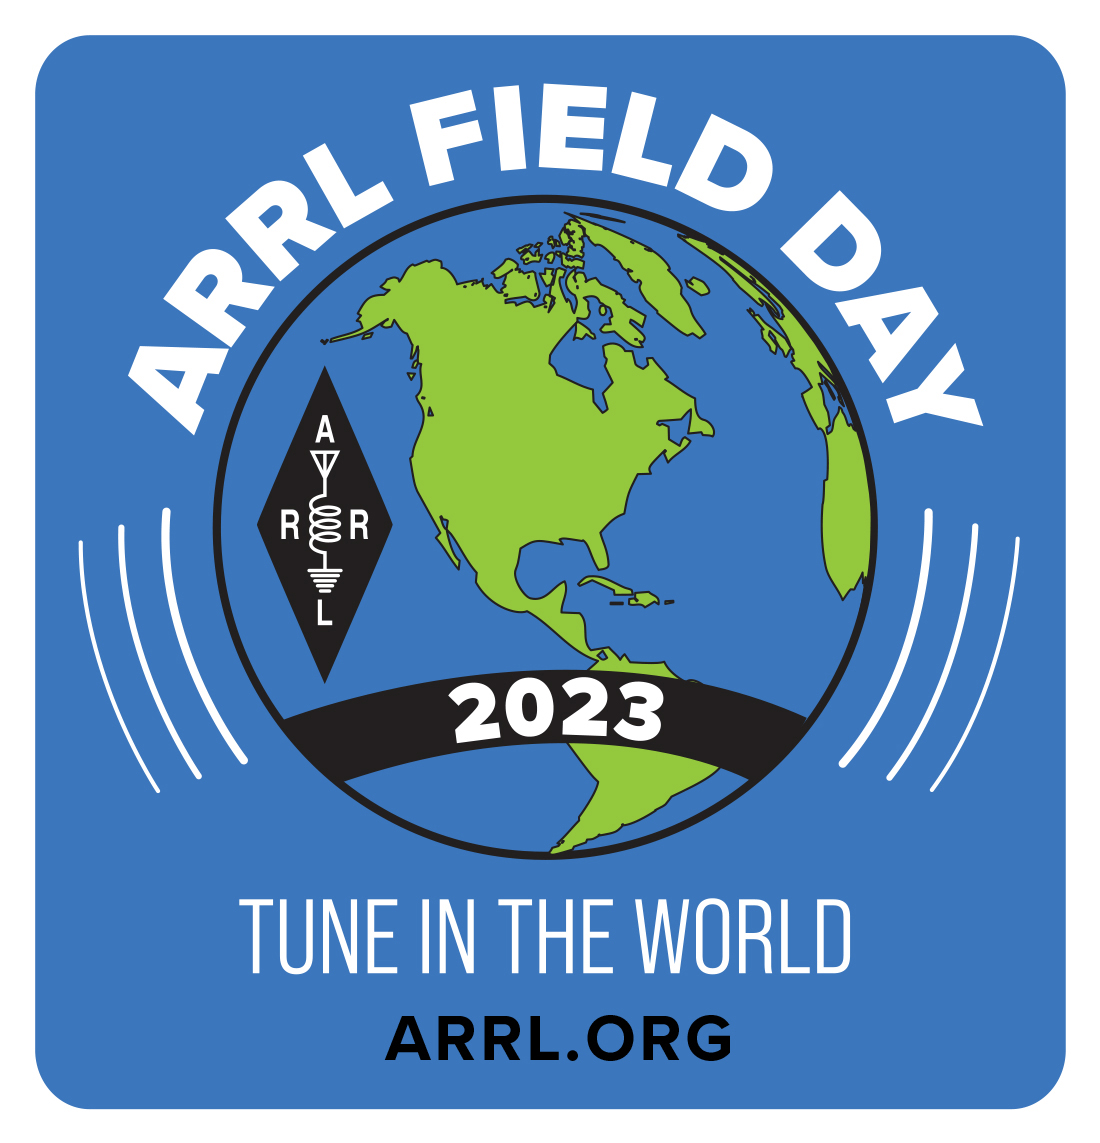 Field Day 2023 Logo